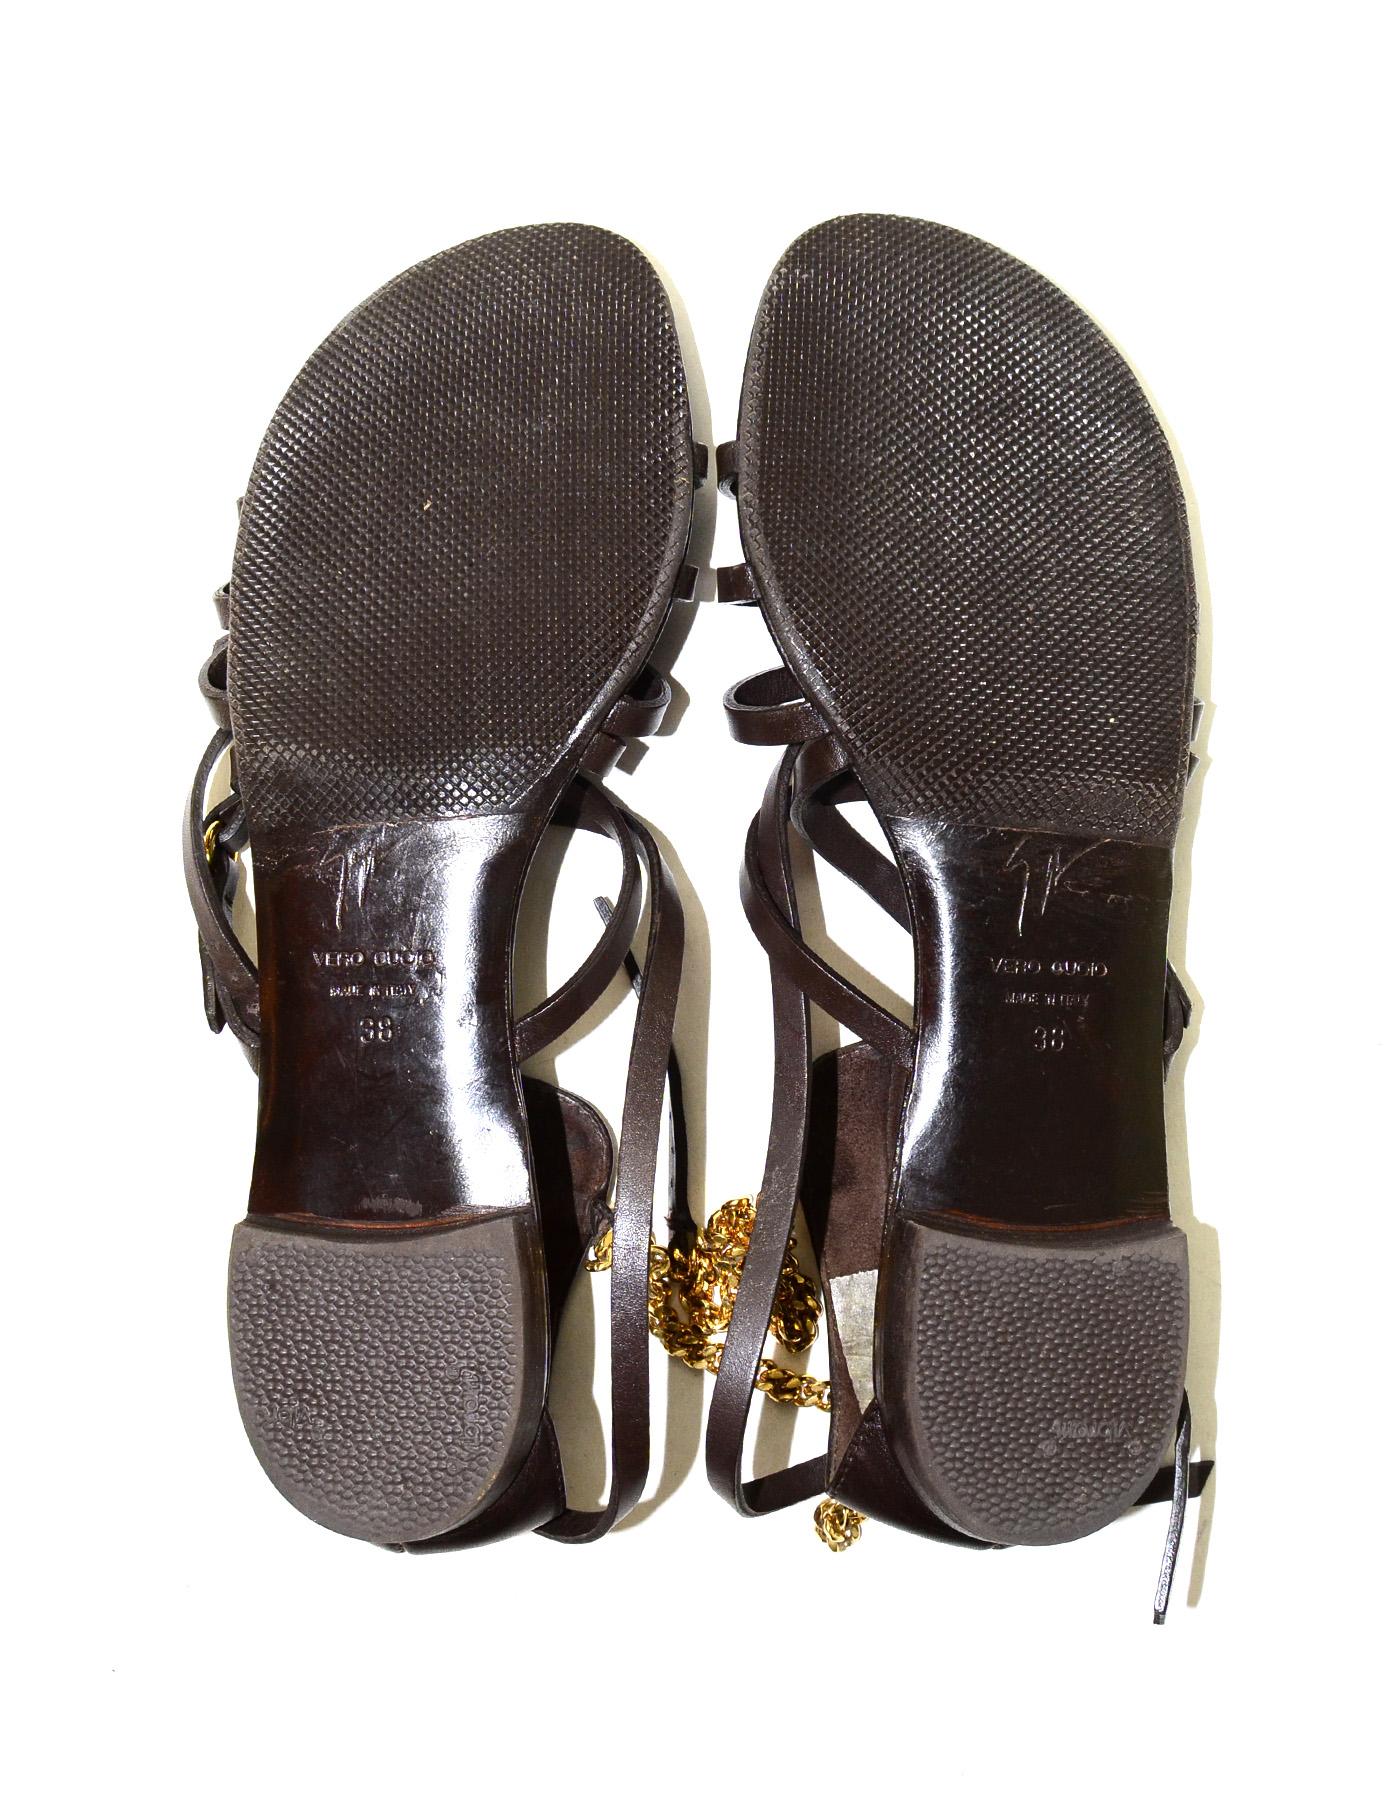 Giuseppe Zanotti Brown Leather Gladiator Sandals W/ Chain Ankle Sz 38 1